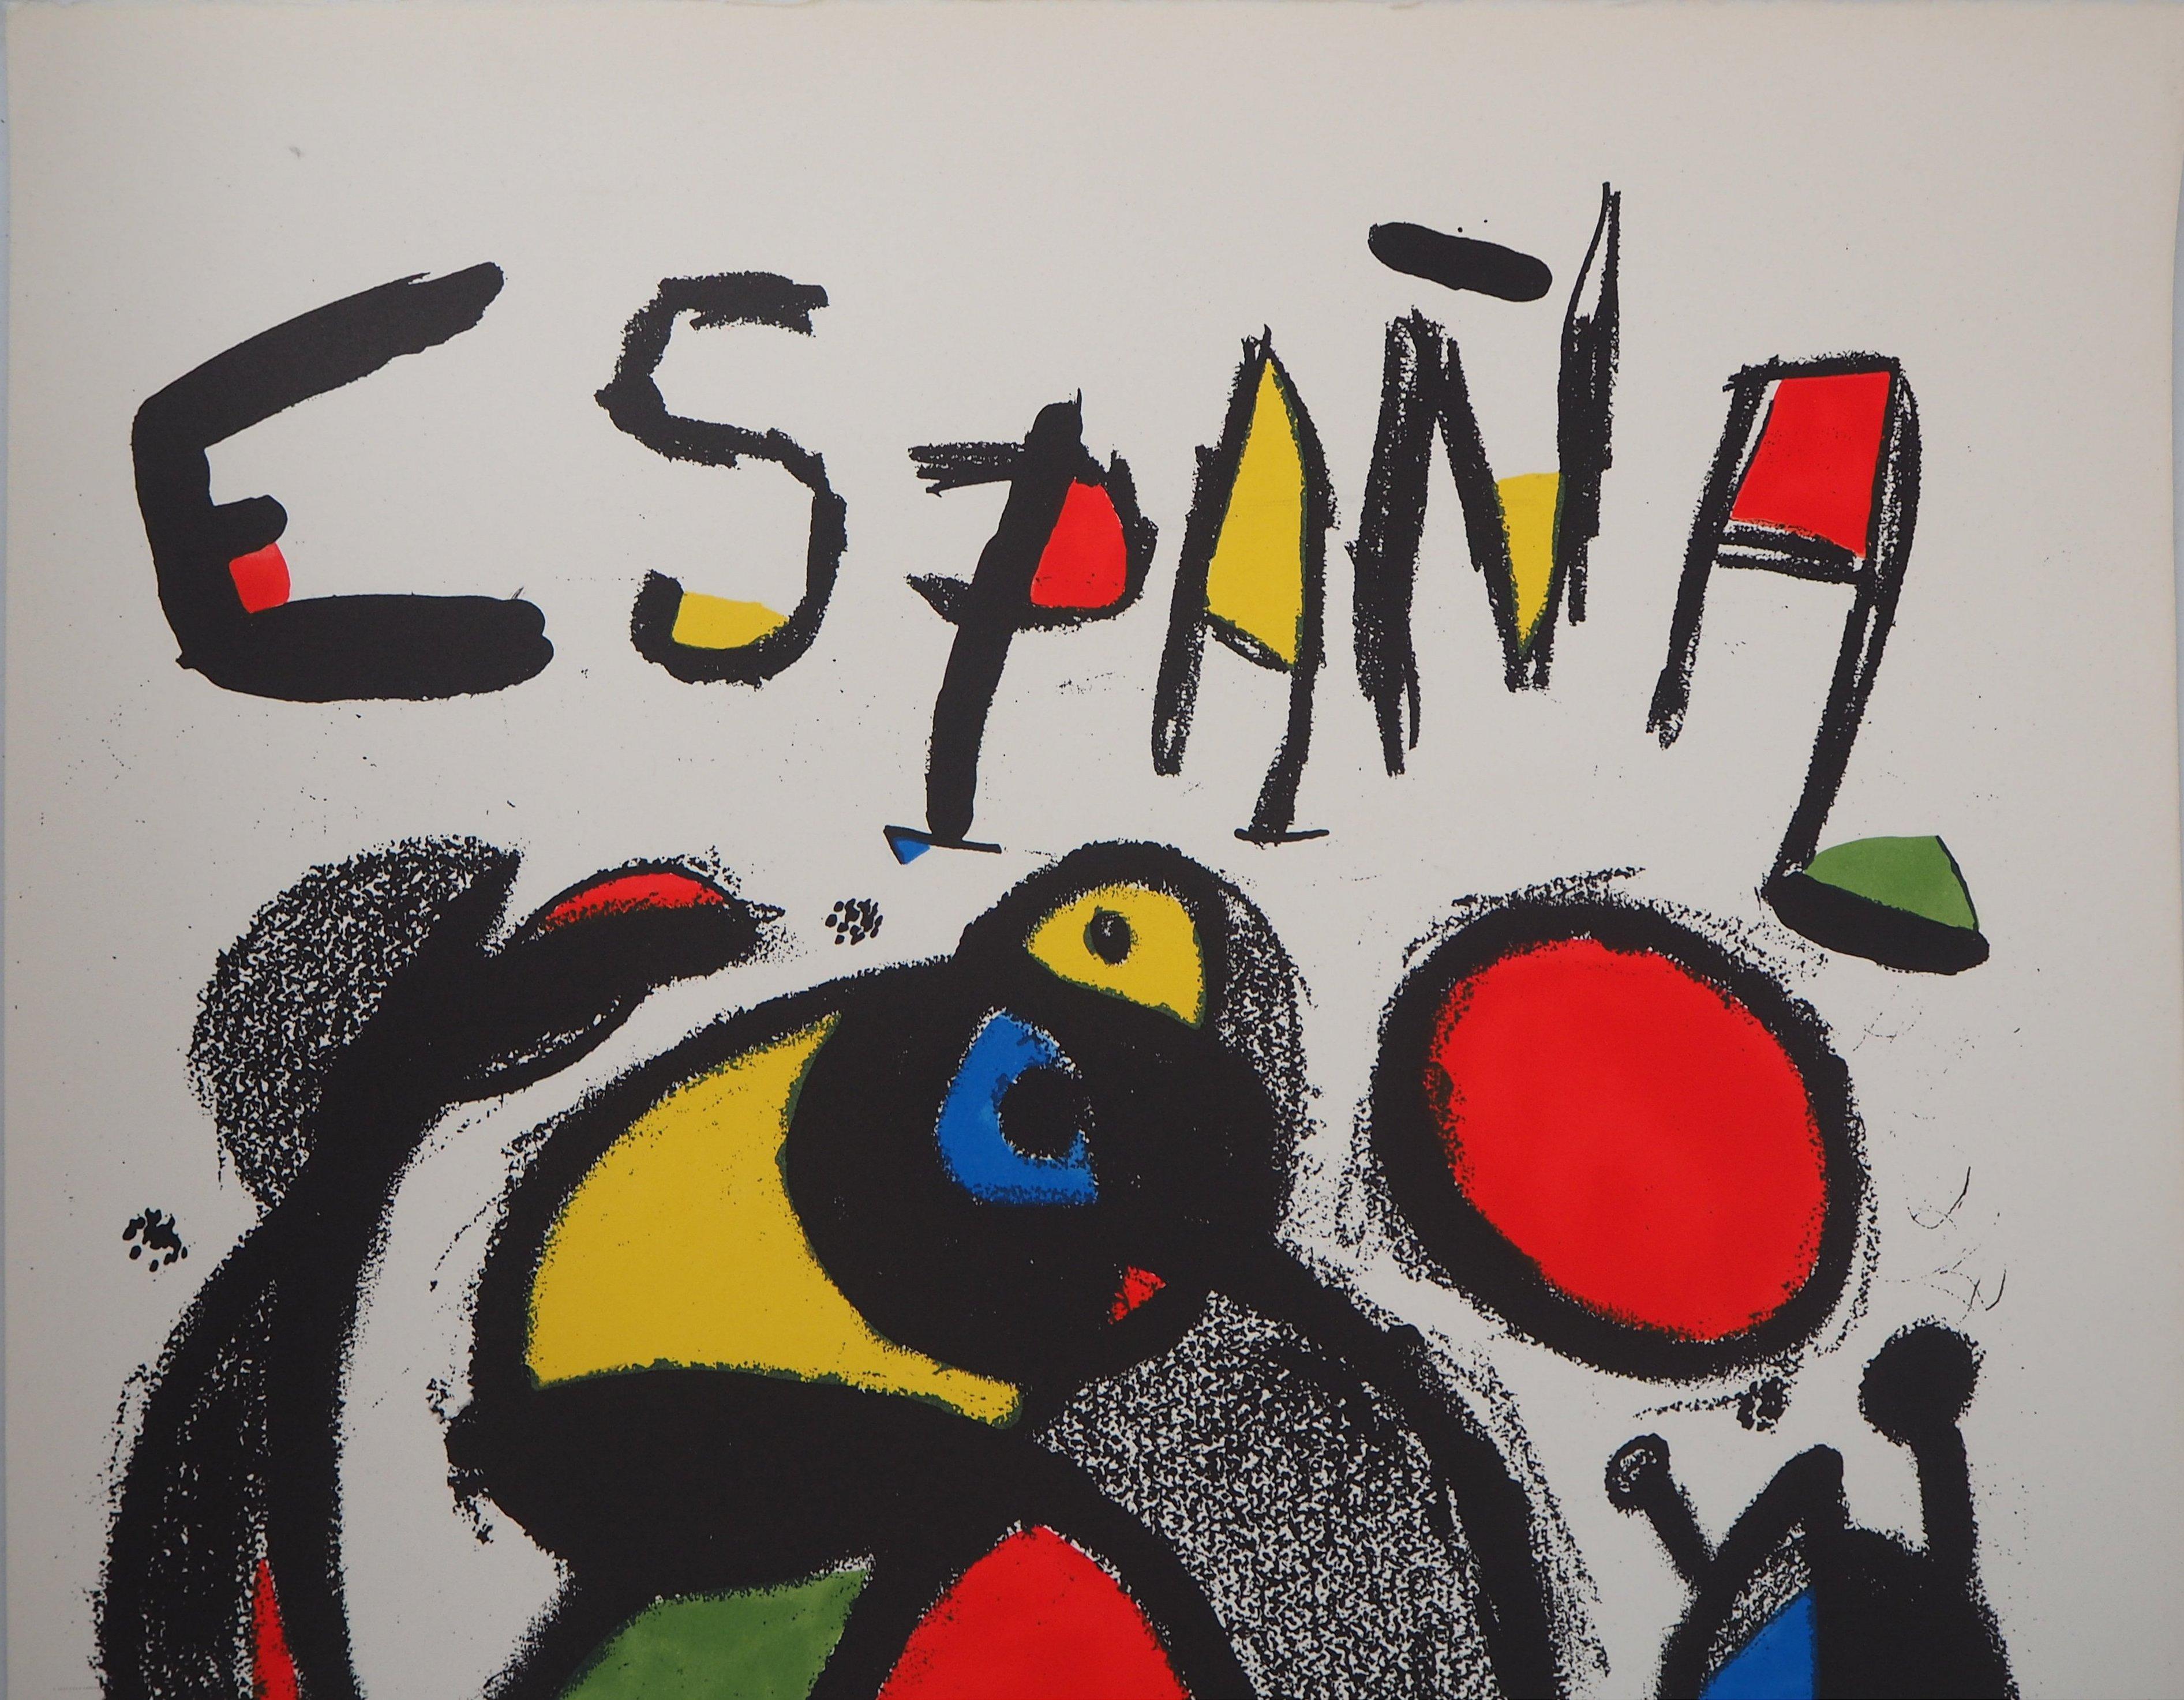 Espana 1982 (Football - Fifa World Cup) - Original lithograph, Handsigned & N° - Abstract Print by Joan Miró